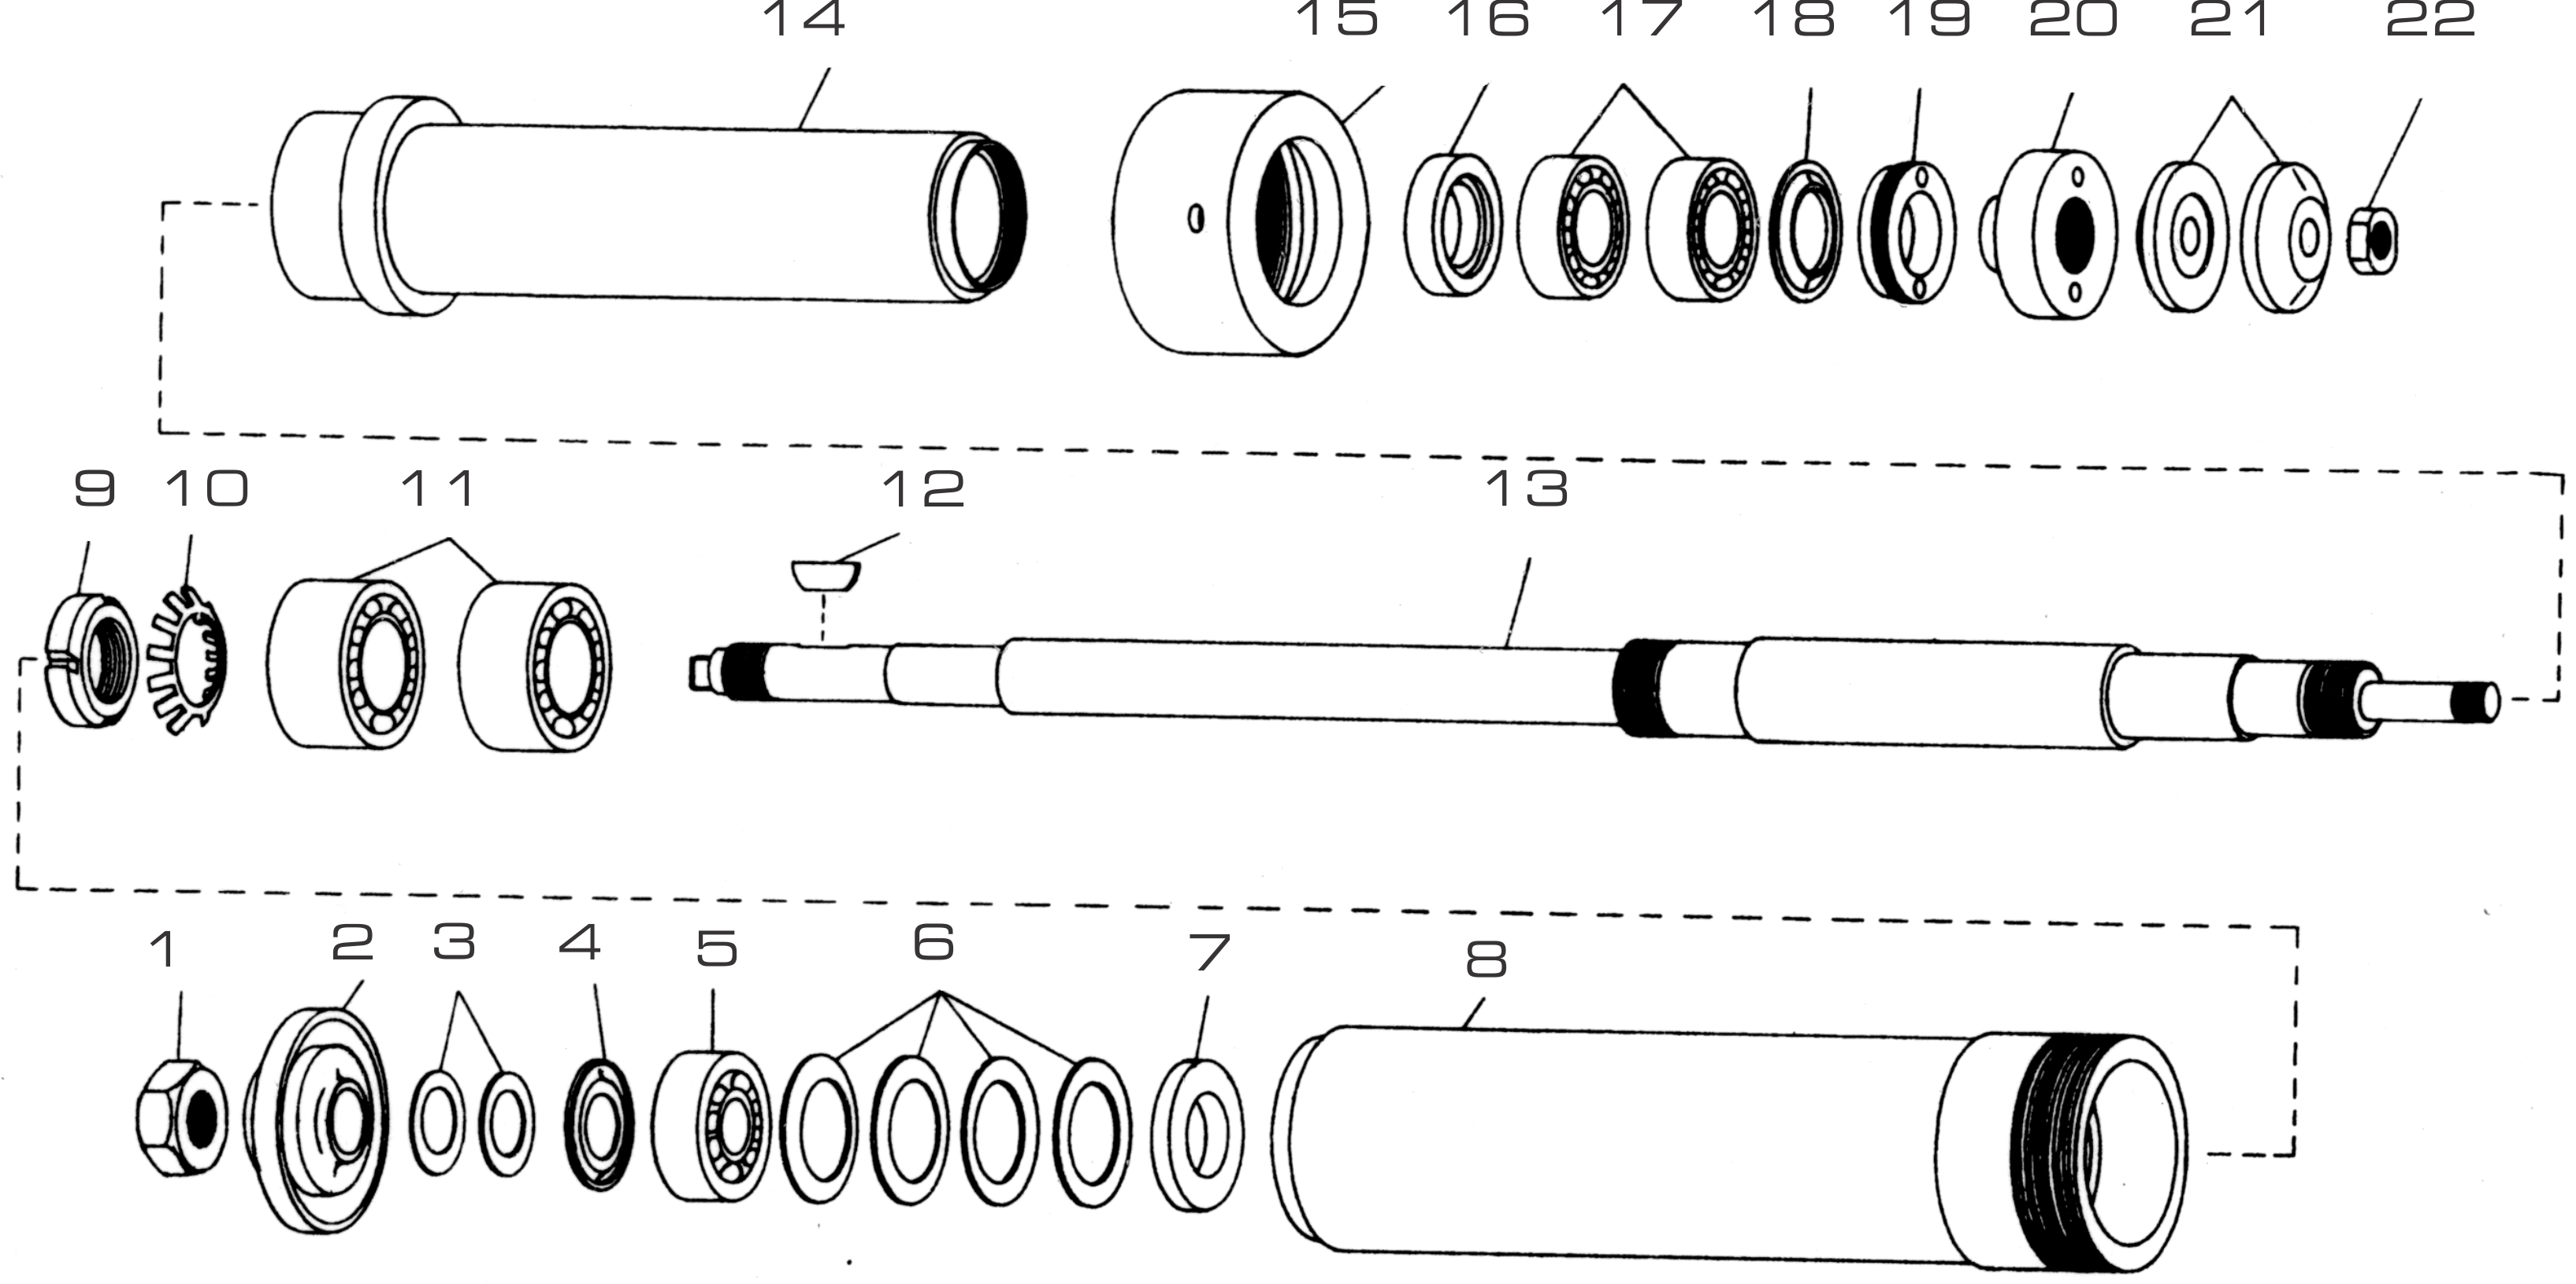 Tool Post Grinder 8" Internal Spindle Replacement Parts | Dumore Series 12 & 25 Tool Post Grinders